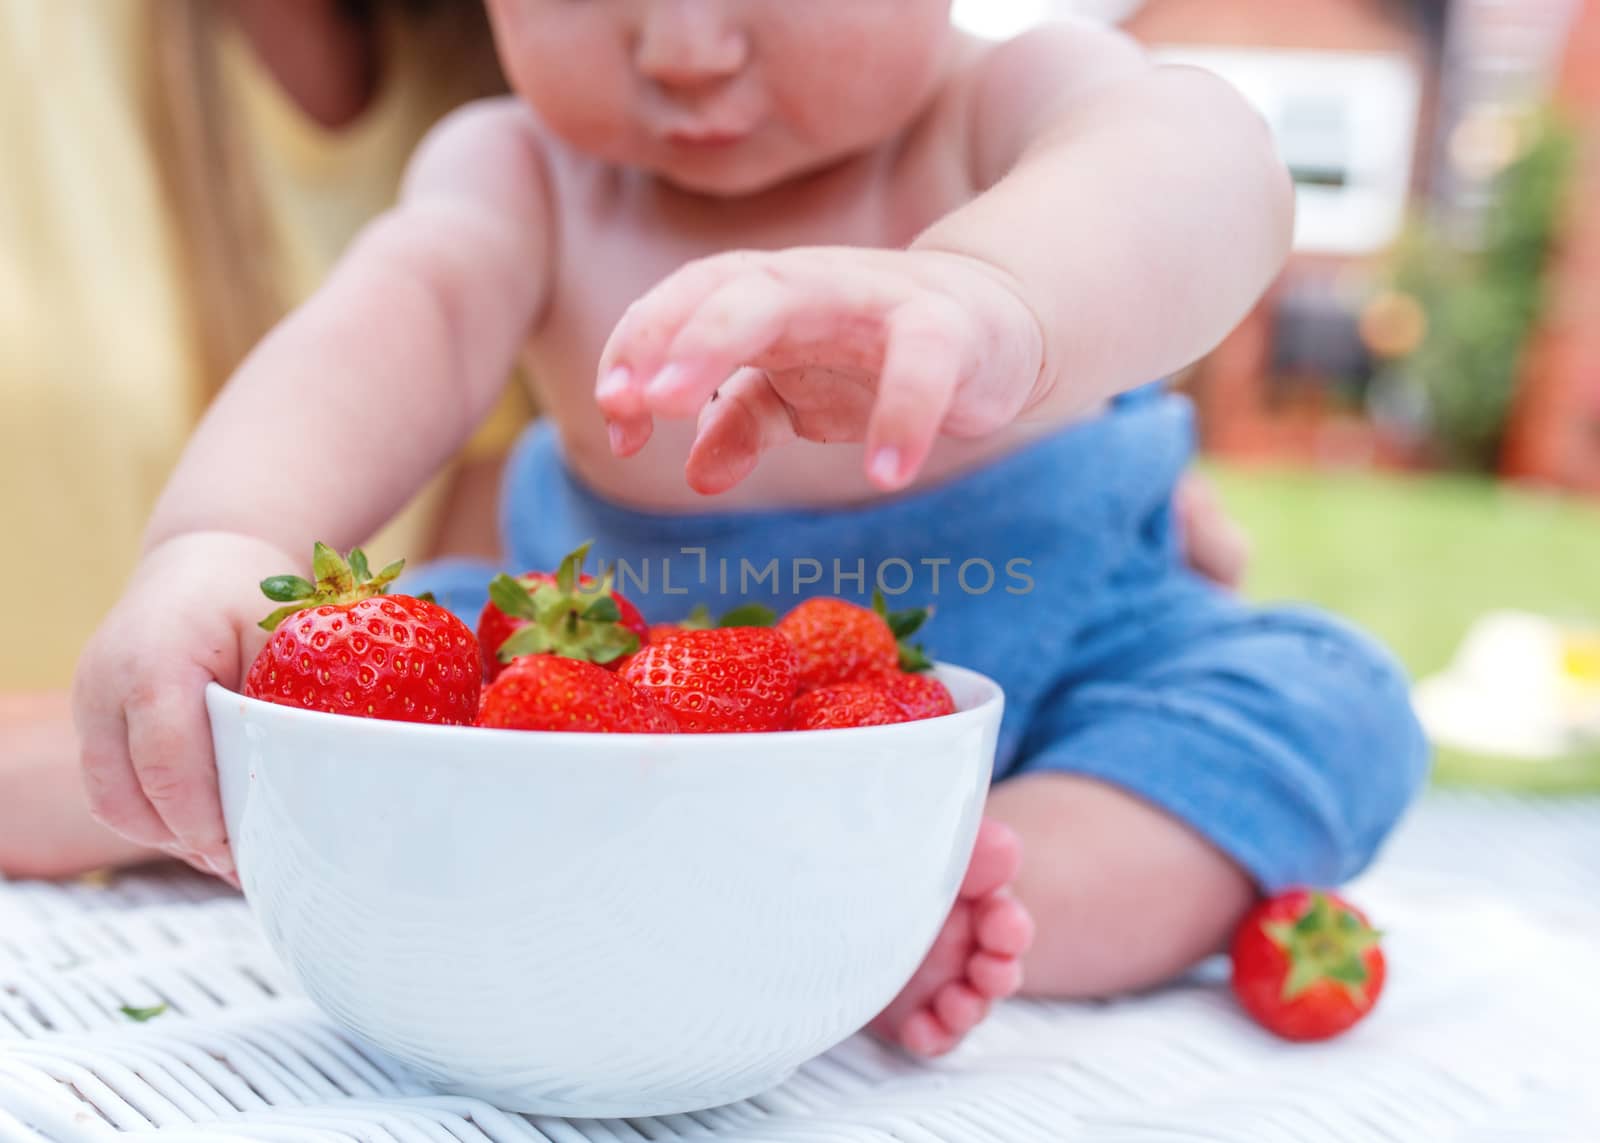 child grubbing strawberries in the bawl